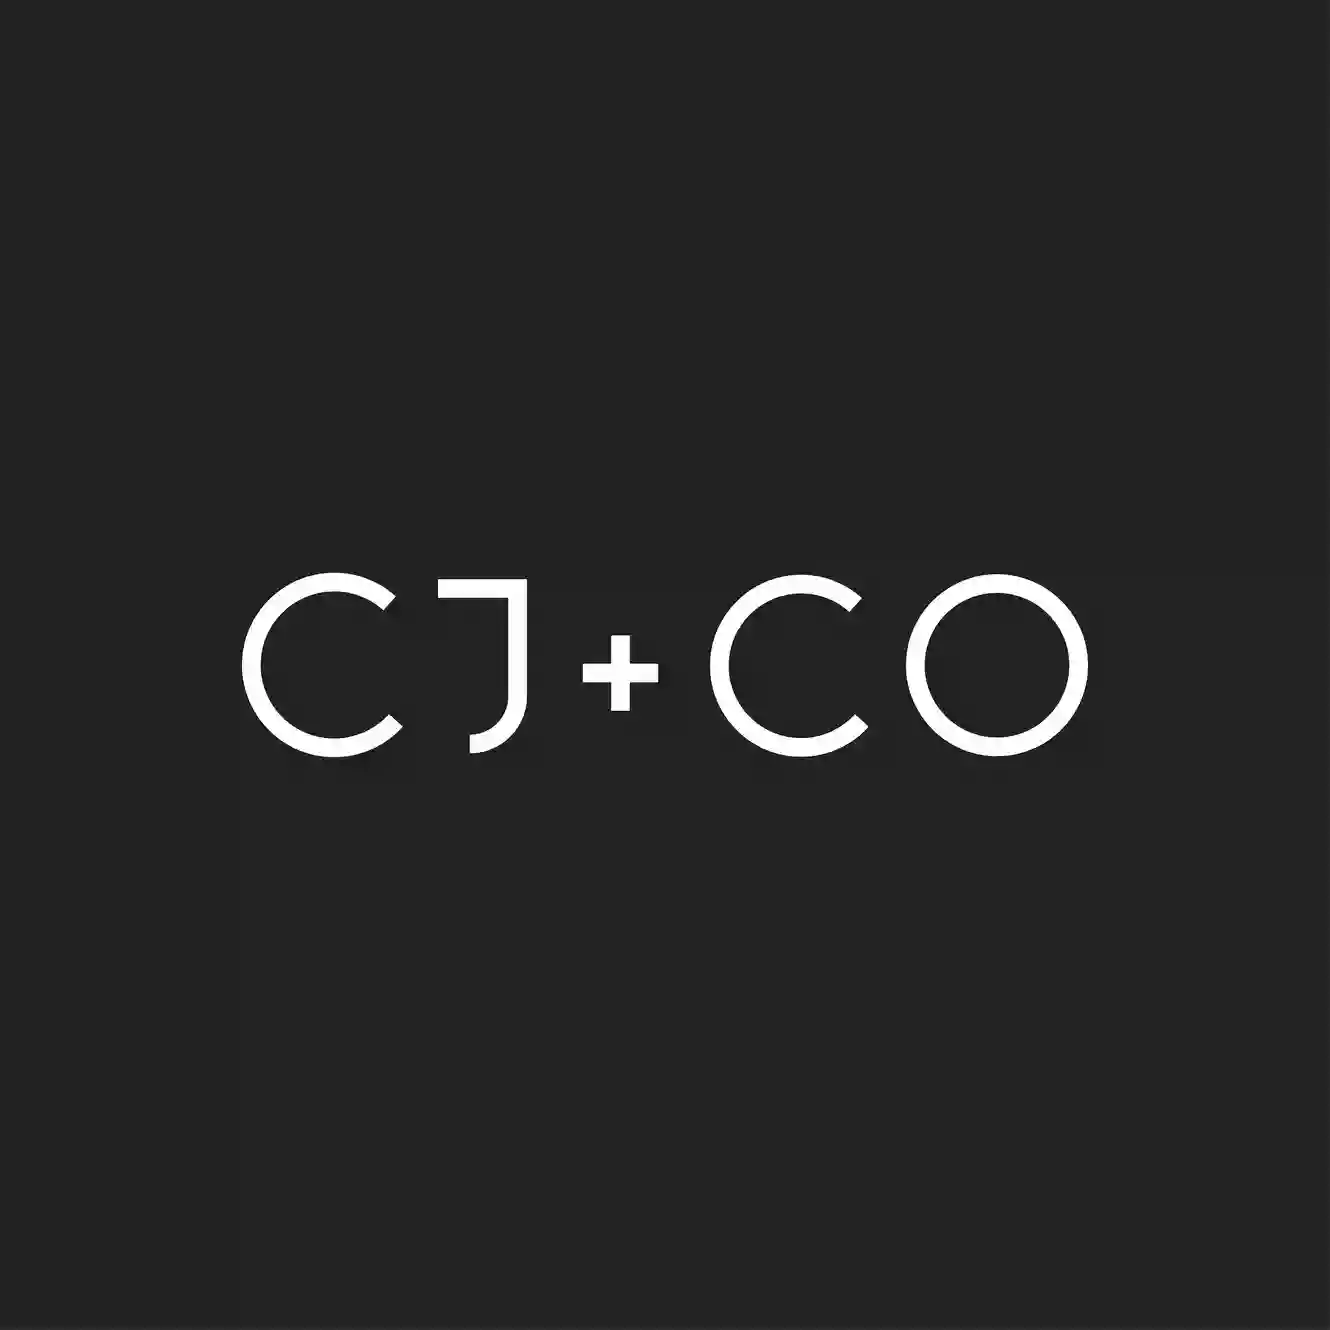 CJ + CO - Christopher John + Co